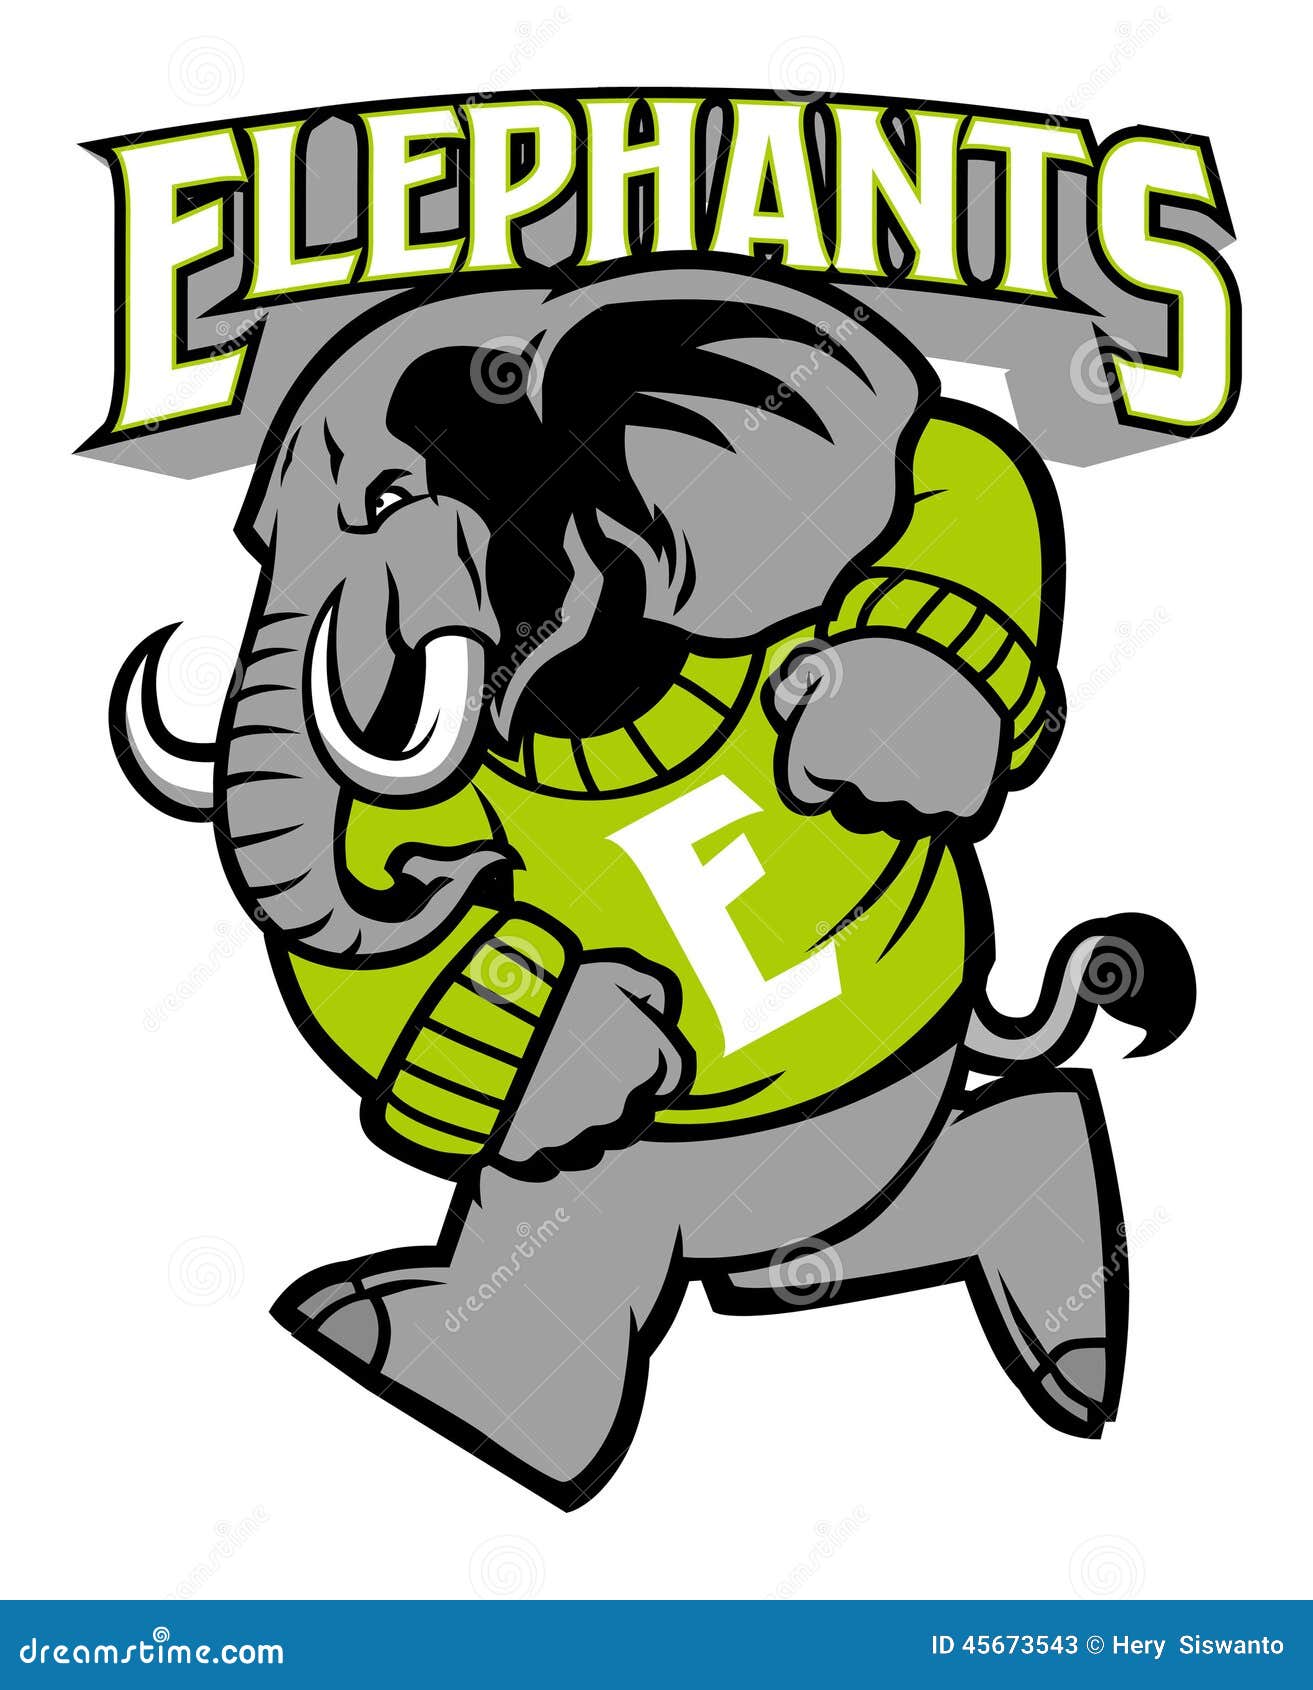 elephant mascot clipart - photo #34